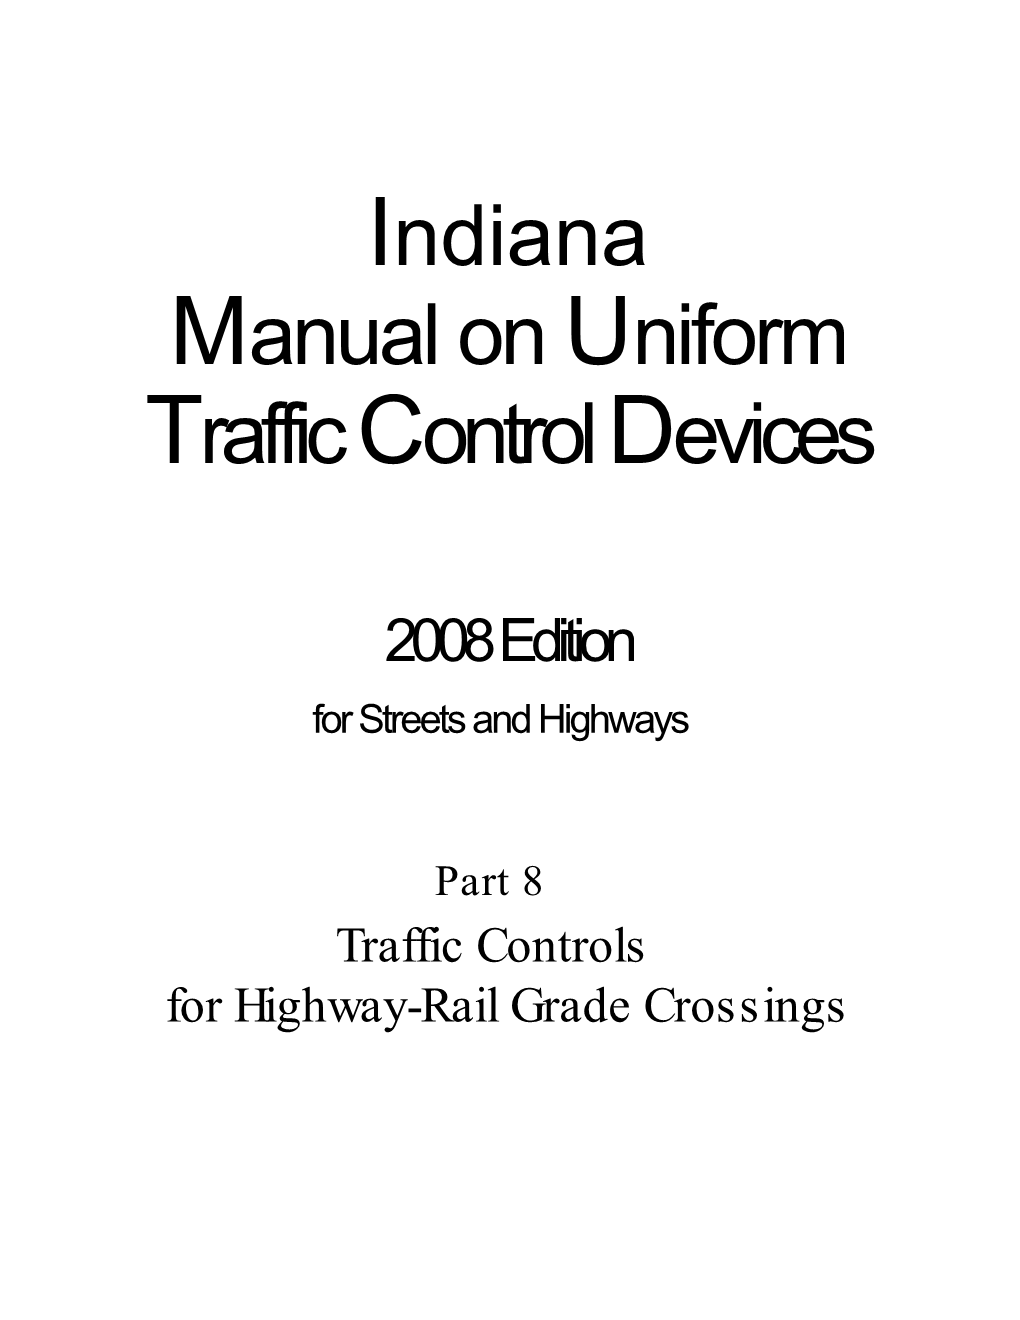 Traffic Controls for Highway-Rail Grade Crossings